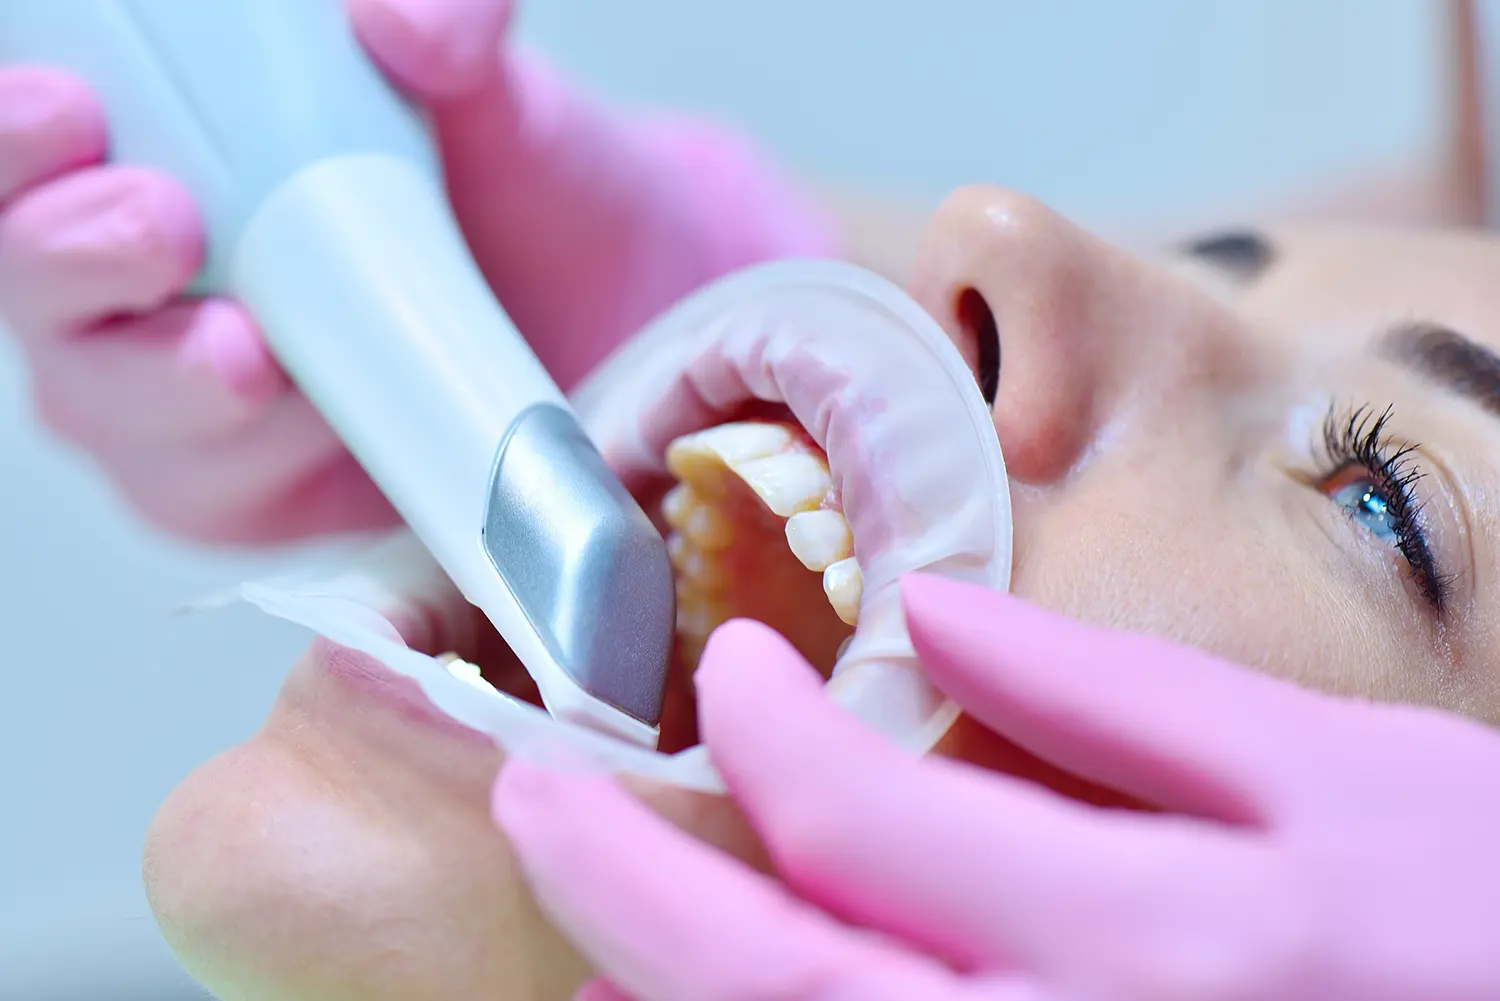 Digitaler Zahnabdruck ohne Würgereiz